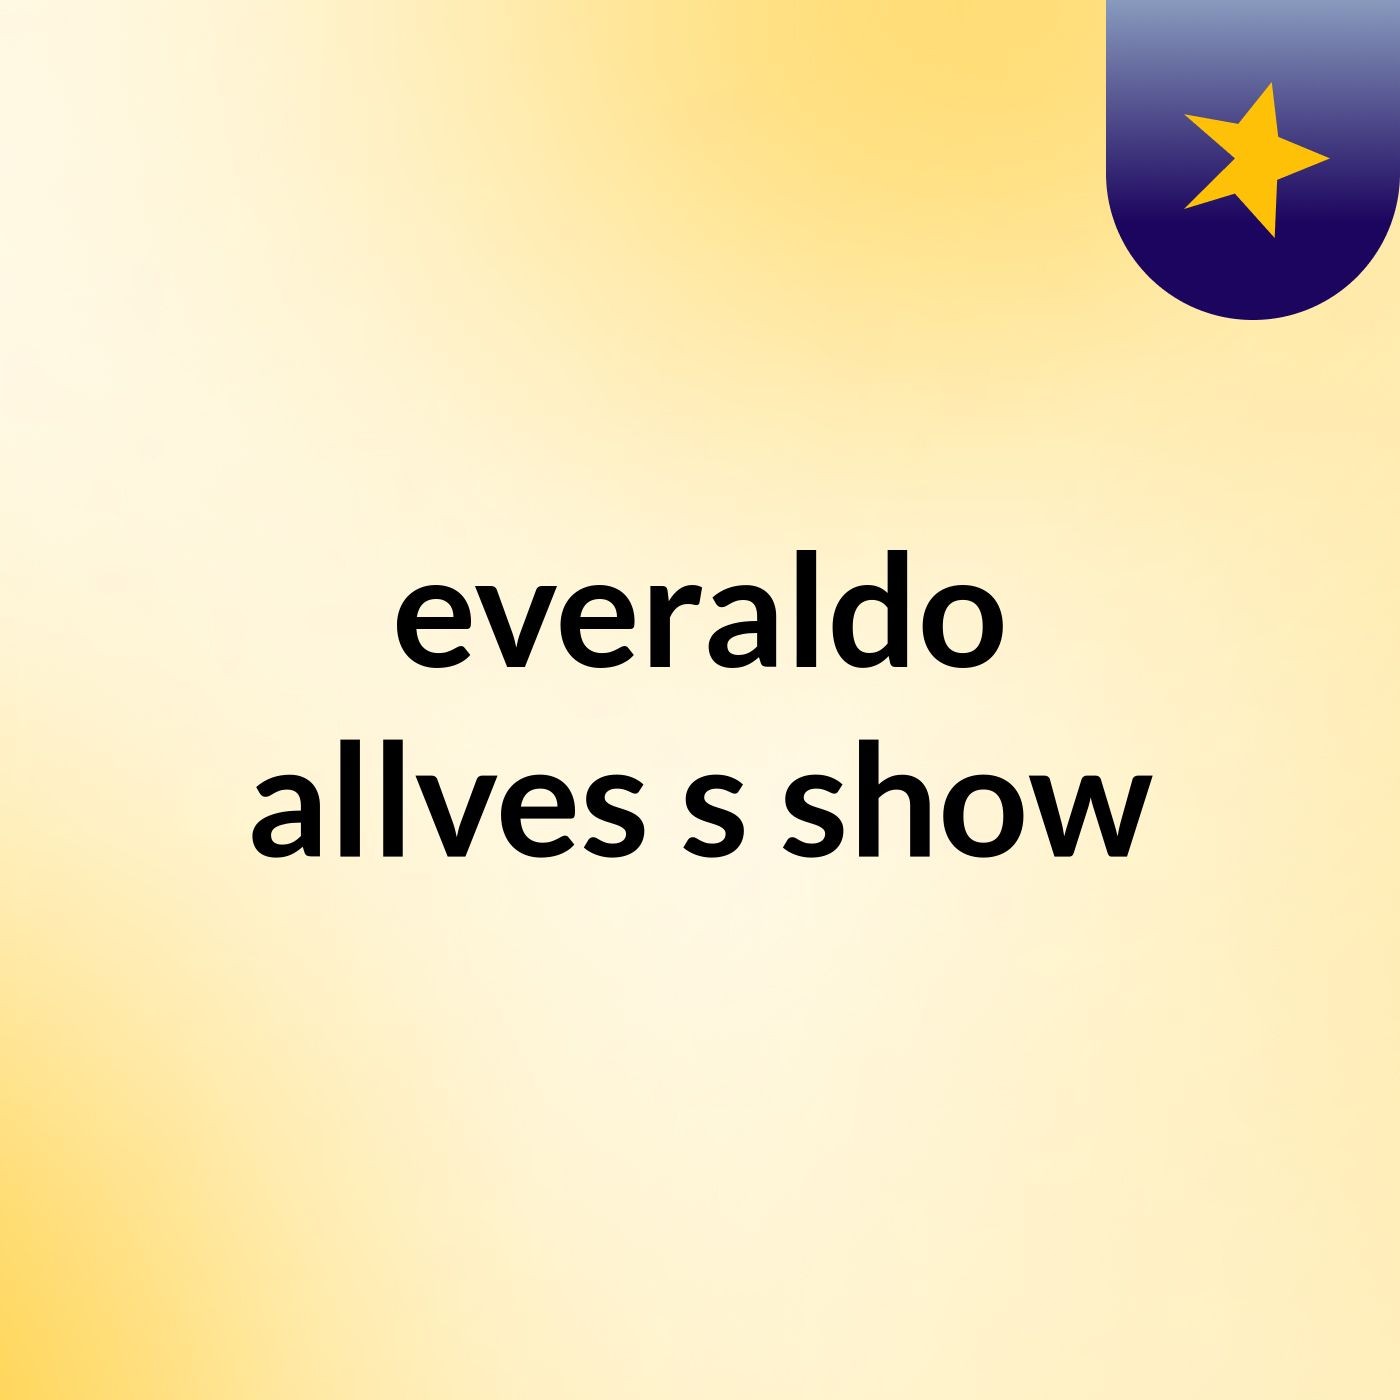 everaldo allves's show